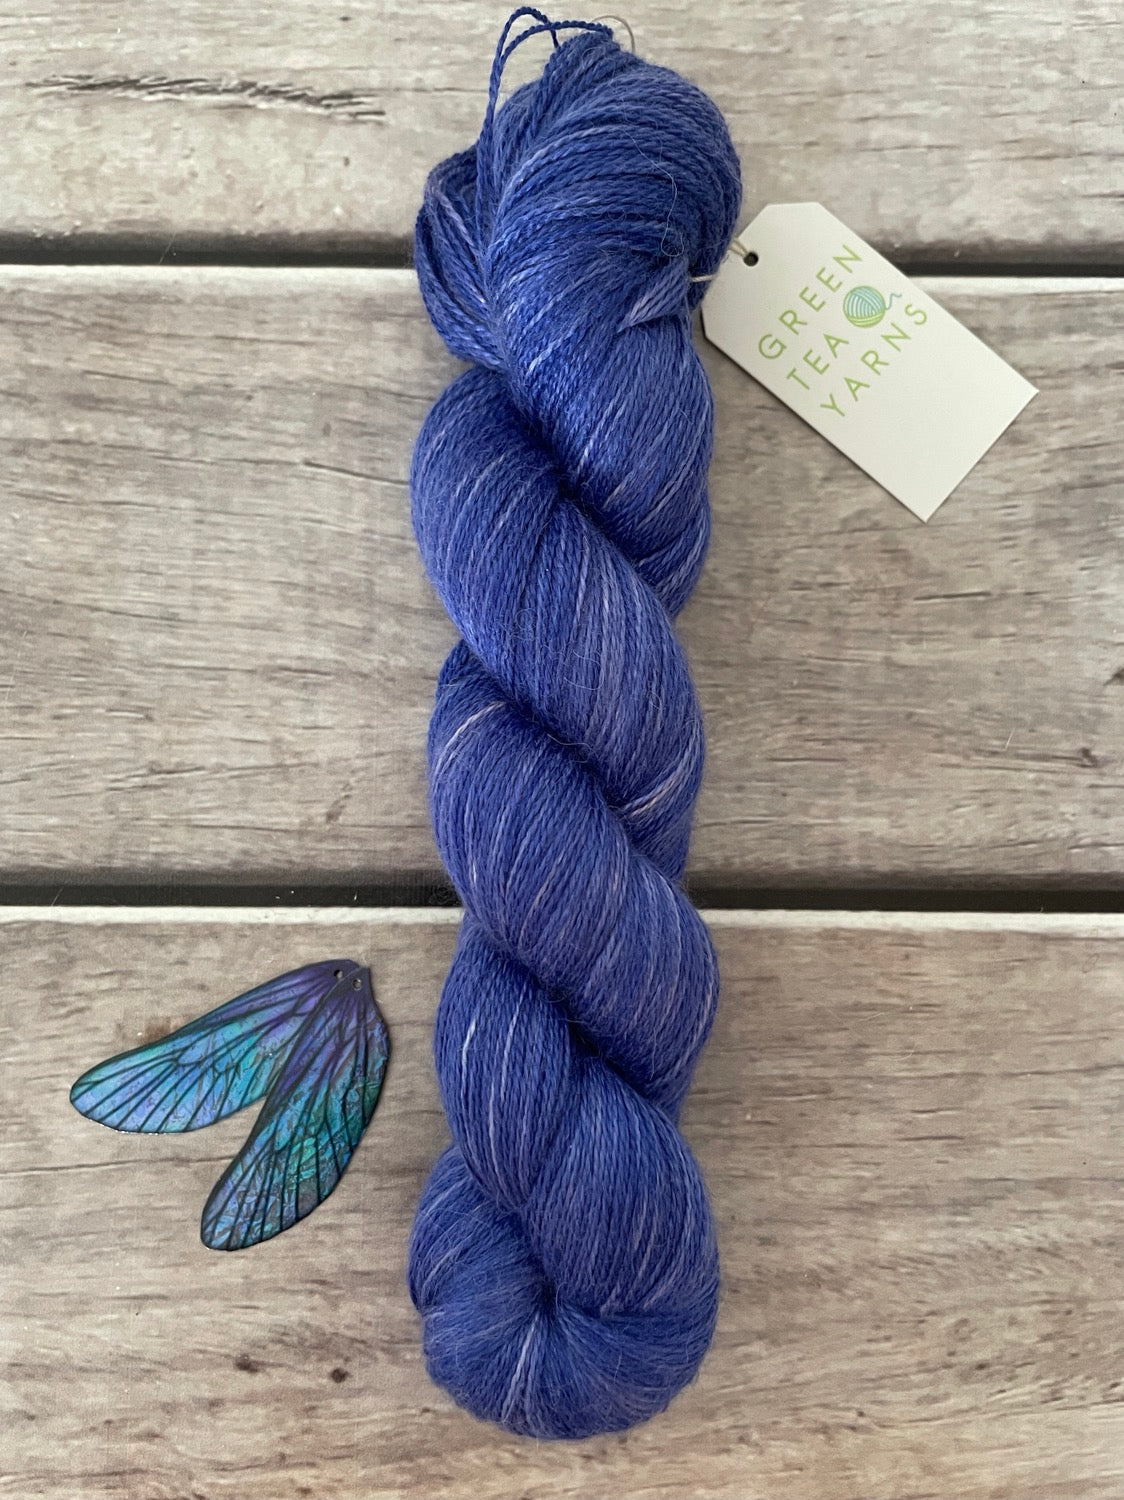 Blue Boy ooak - 2 Ply in silk and alpaca - Echinacea